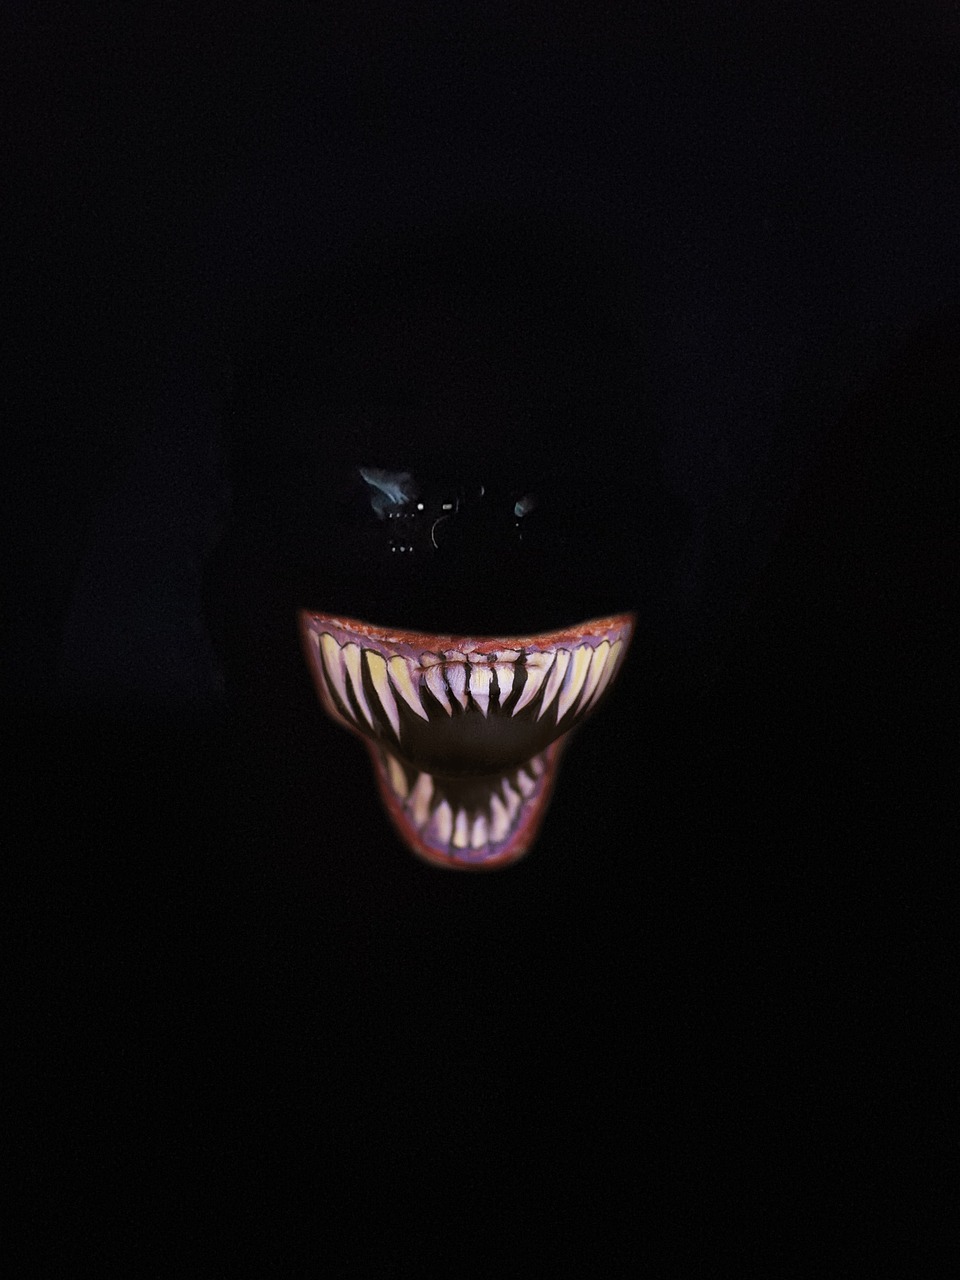 https://pixabay.com/illustrations/monster-alien-nightmare-2772071/